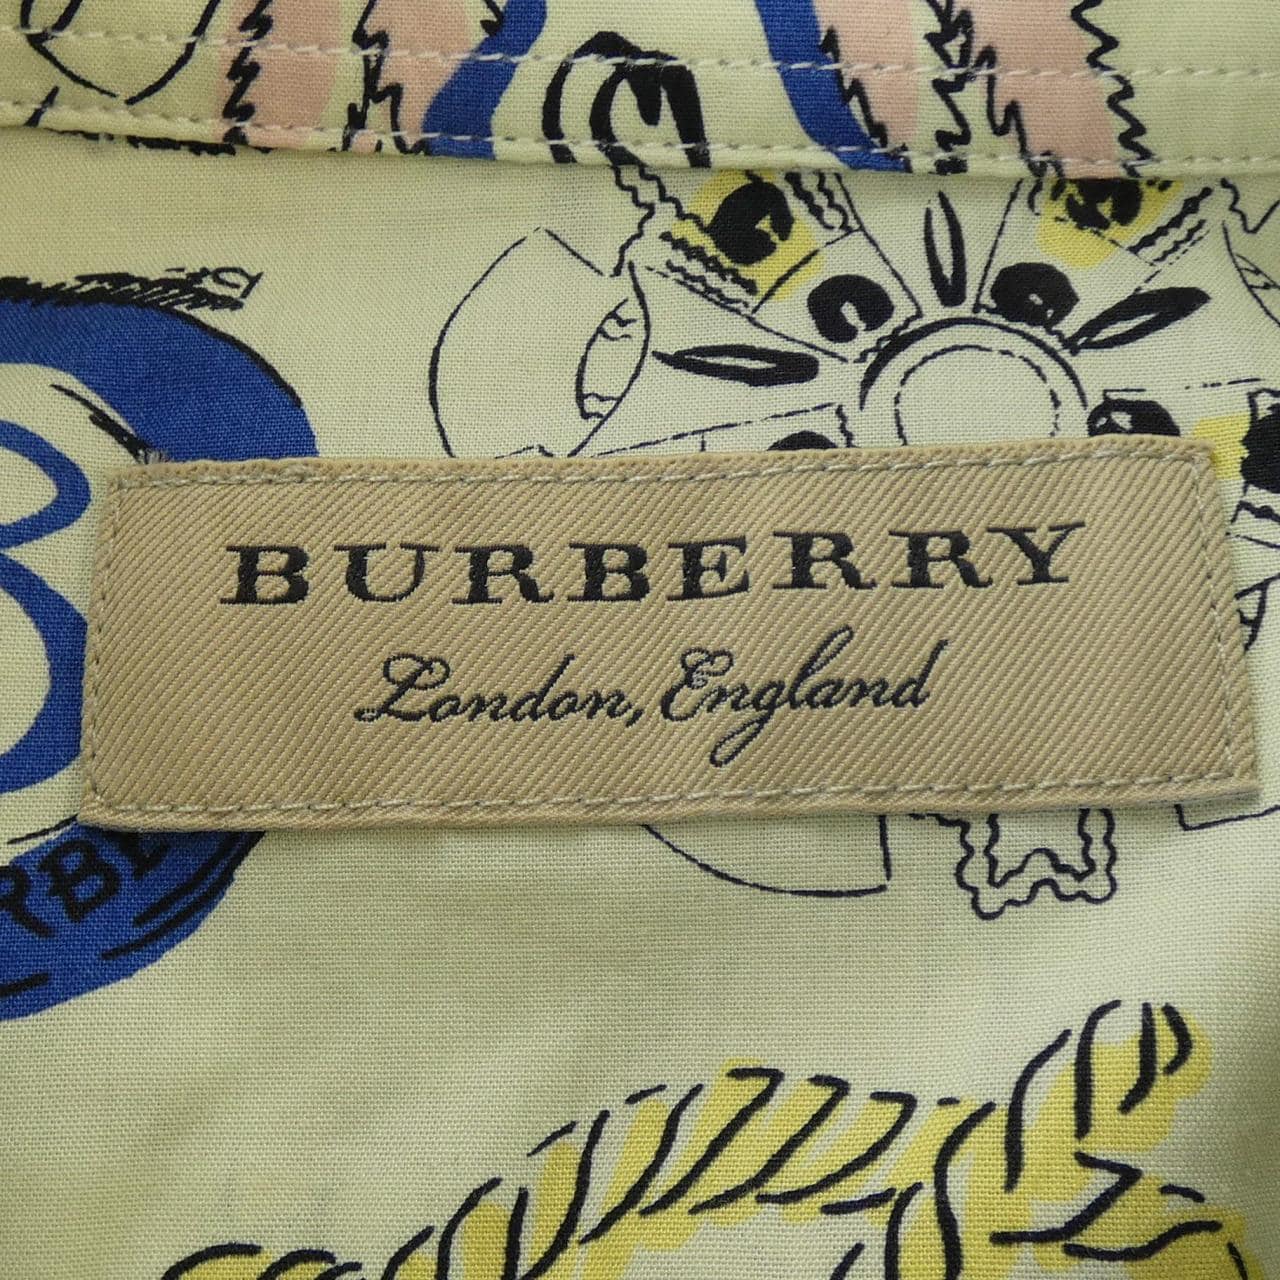 BURBERRY shirt